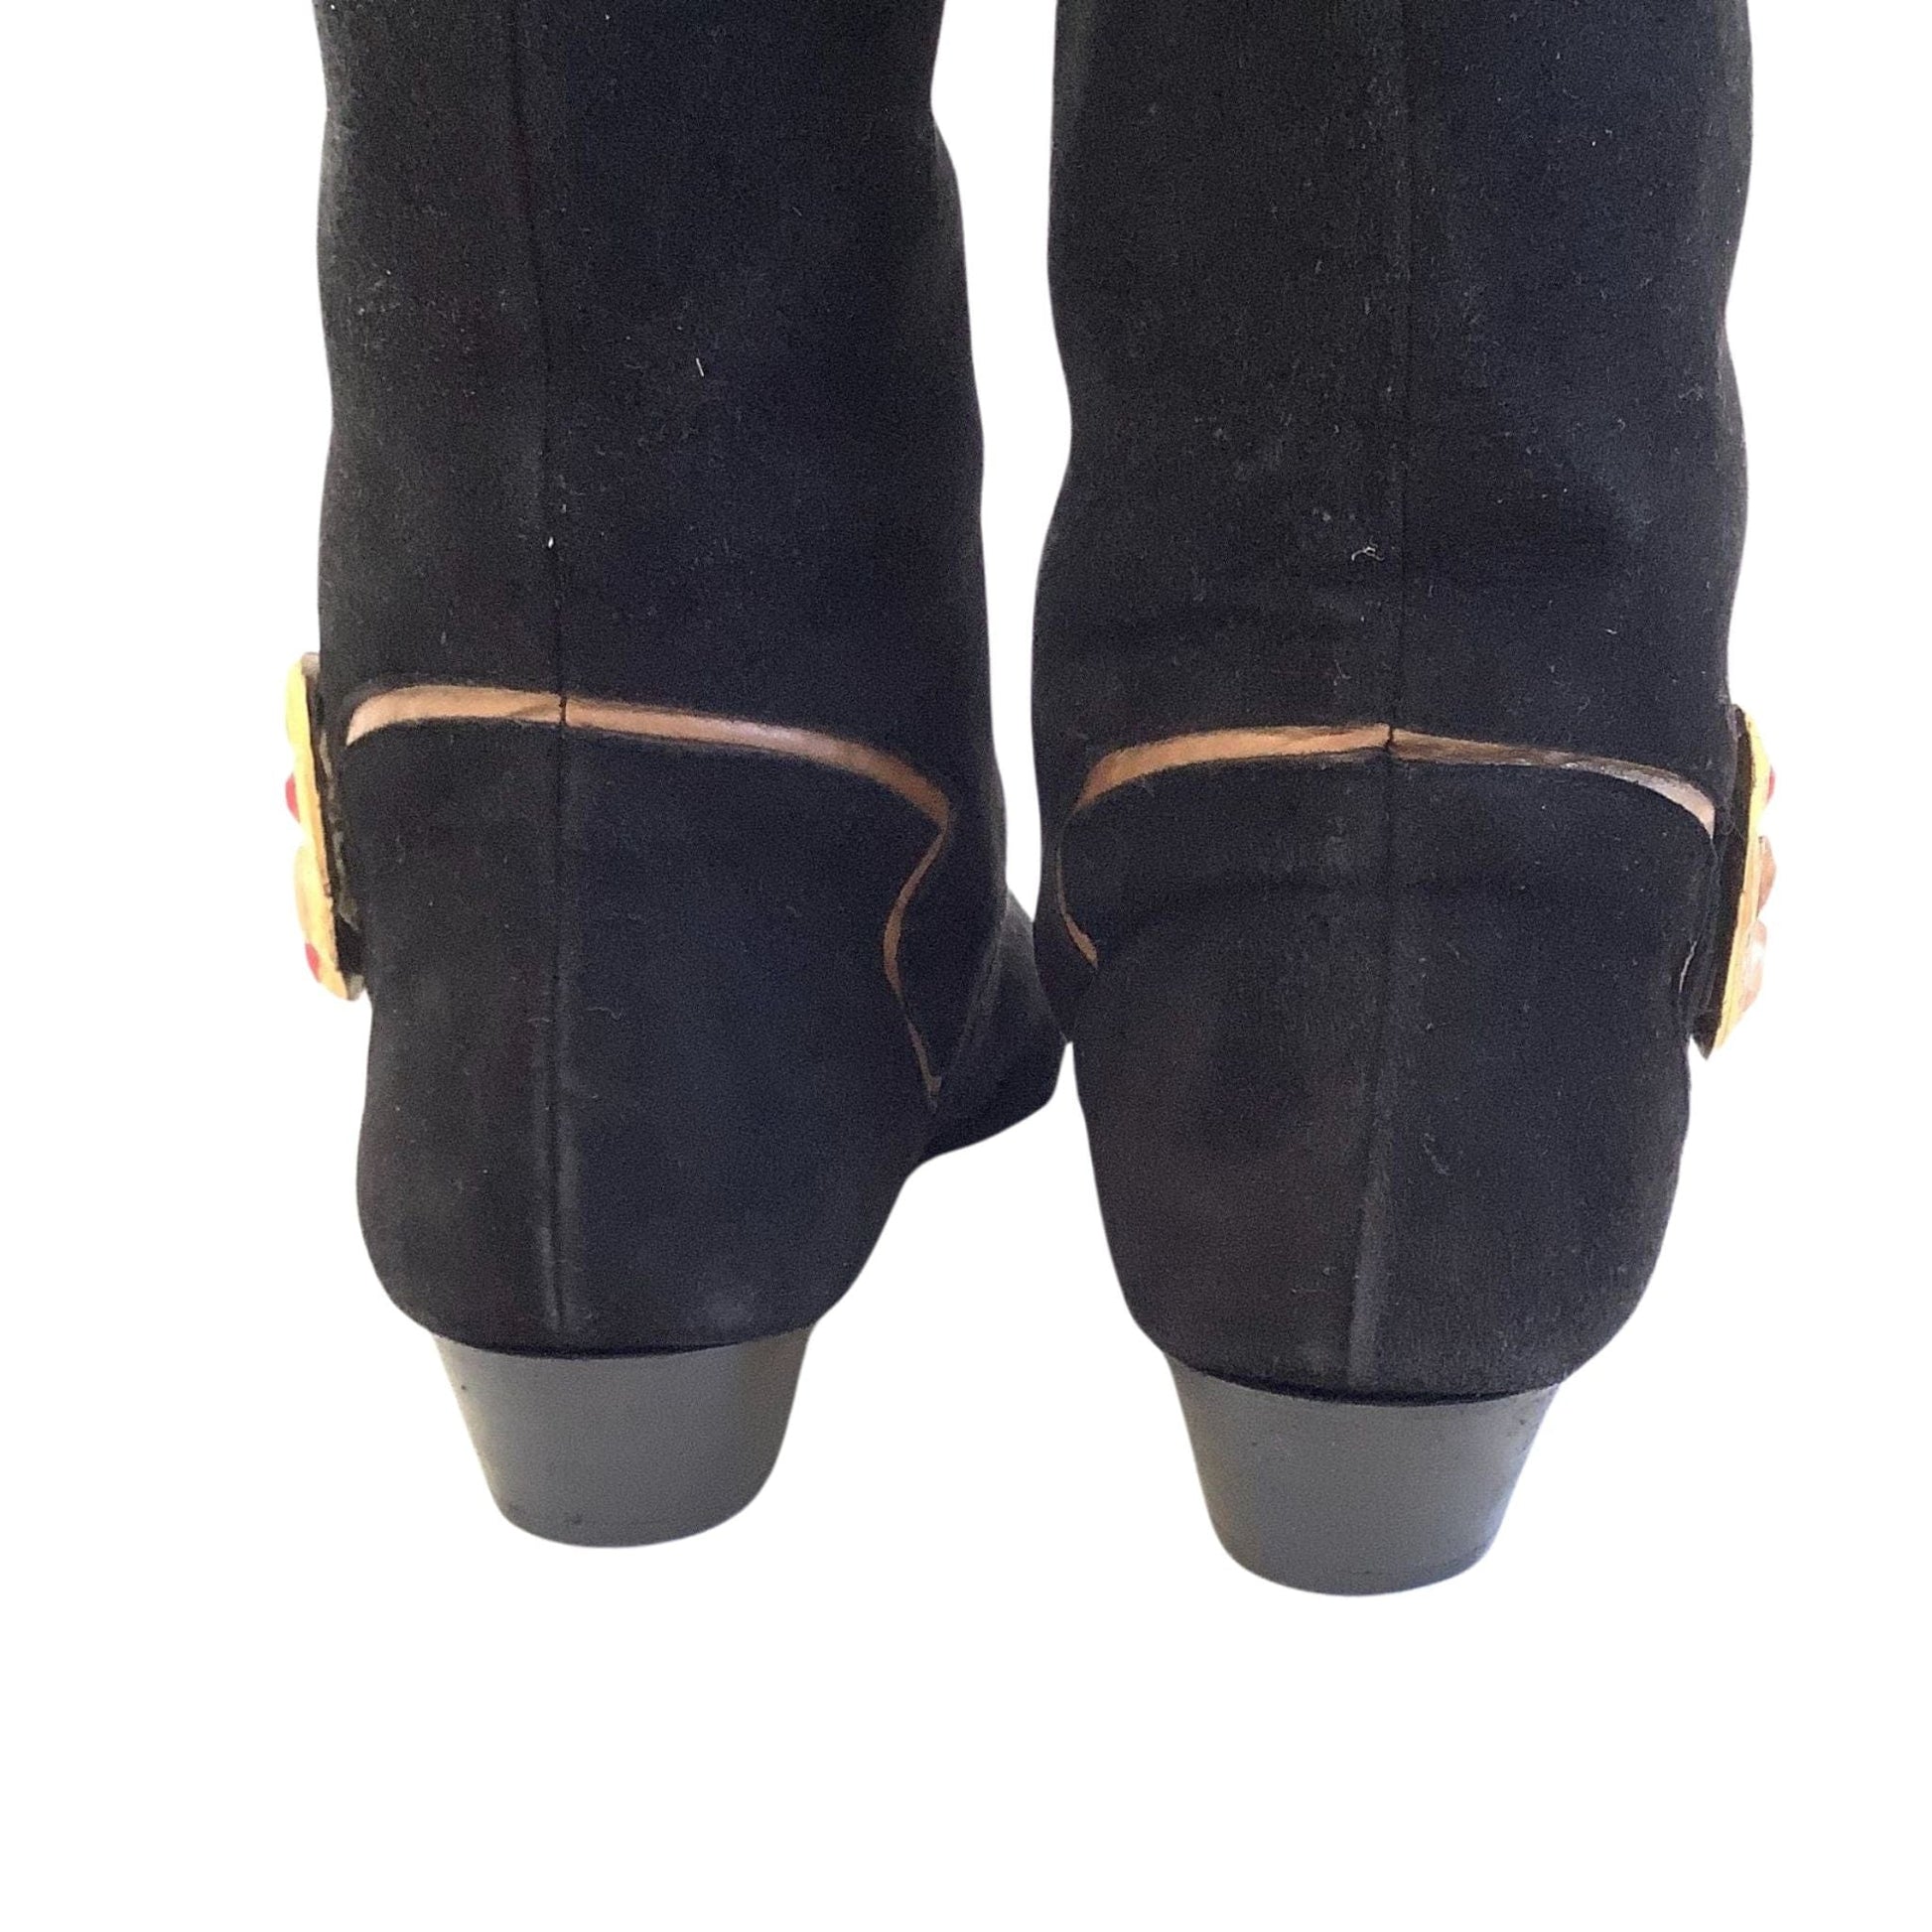 Xavier Danaud Boots 6.5 / Black / Vintage 1980s